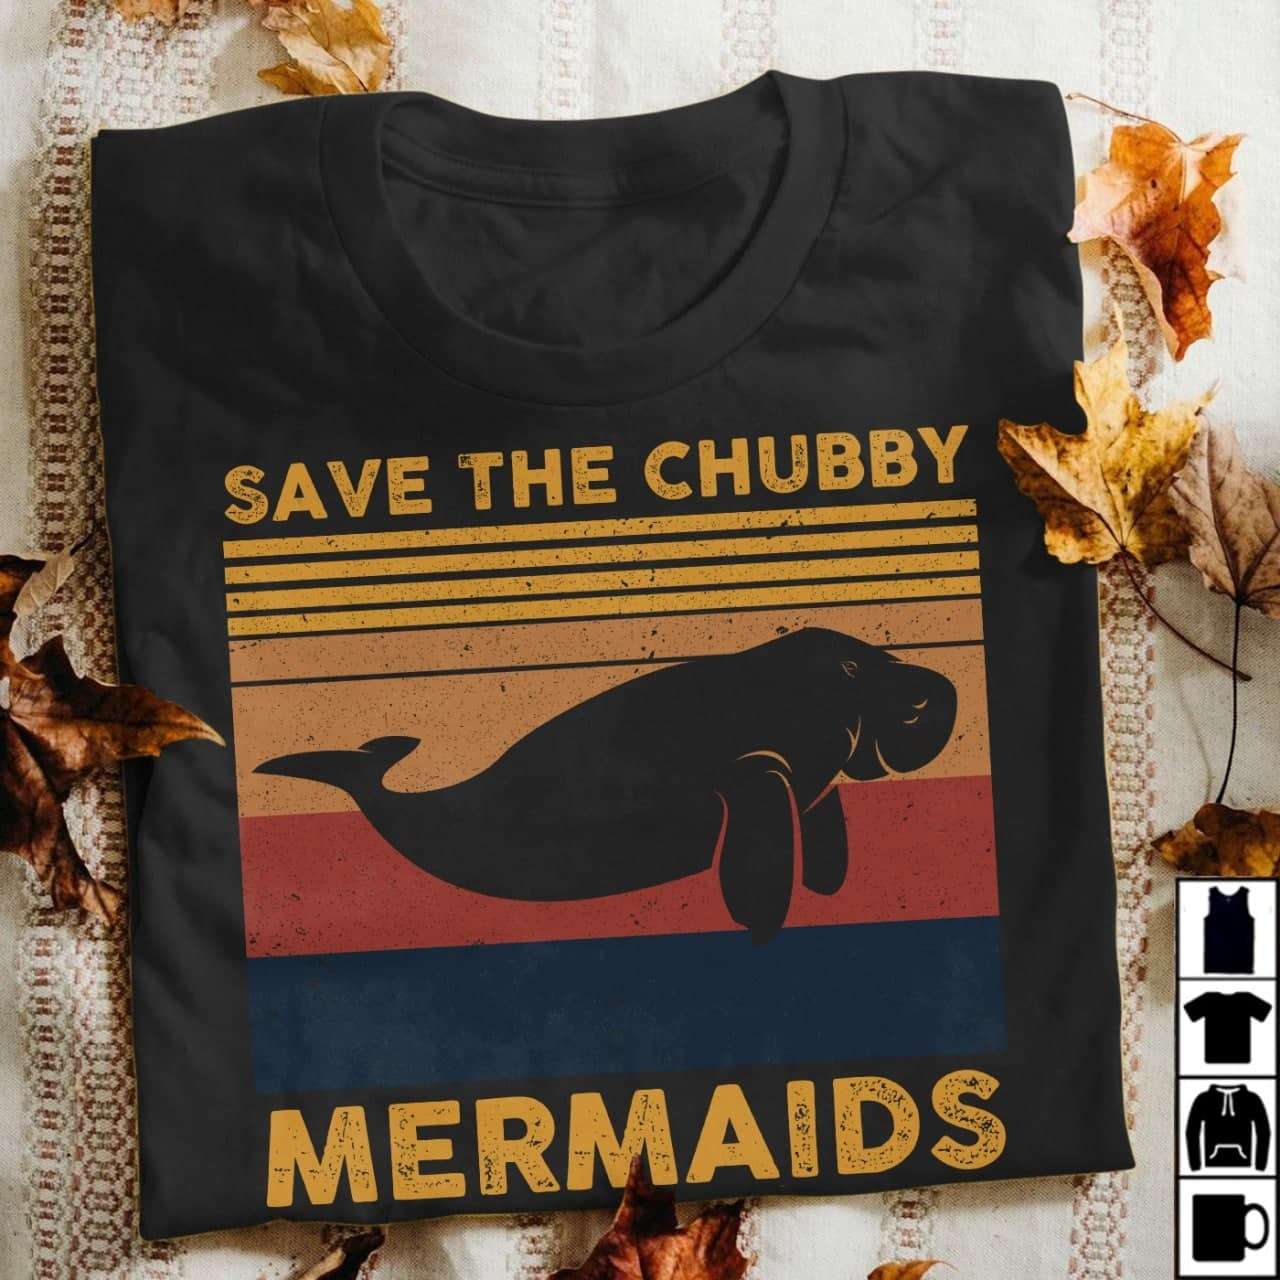 Water Seal Chubby - Save the chubby mermaids